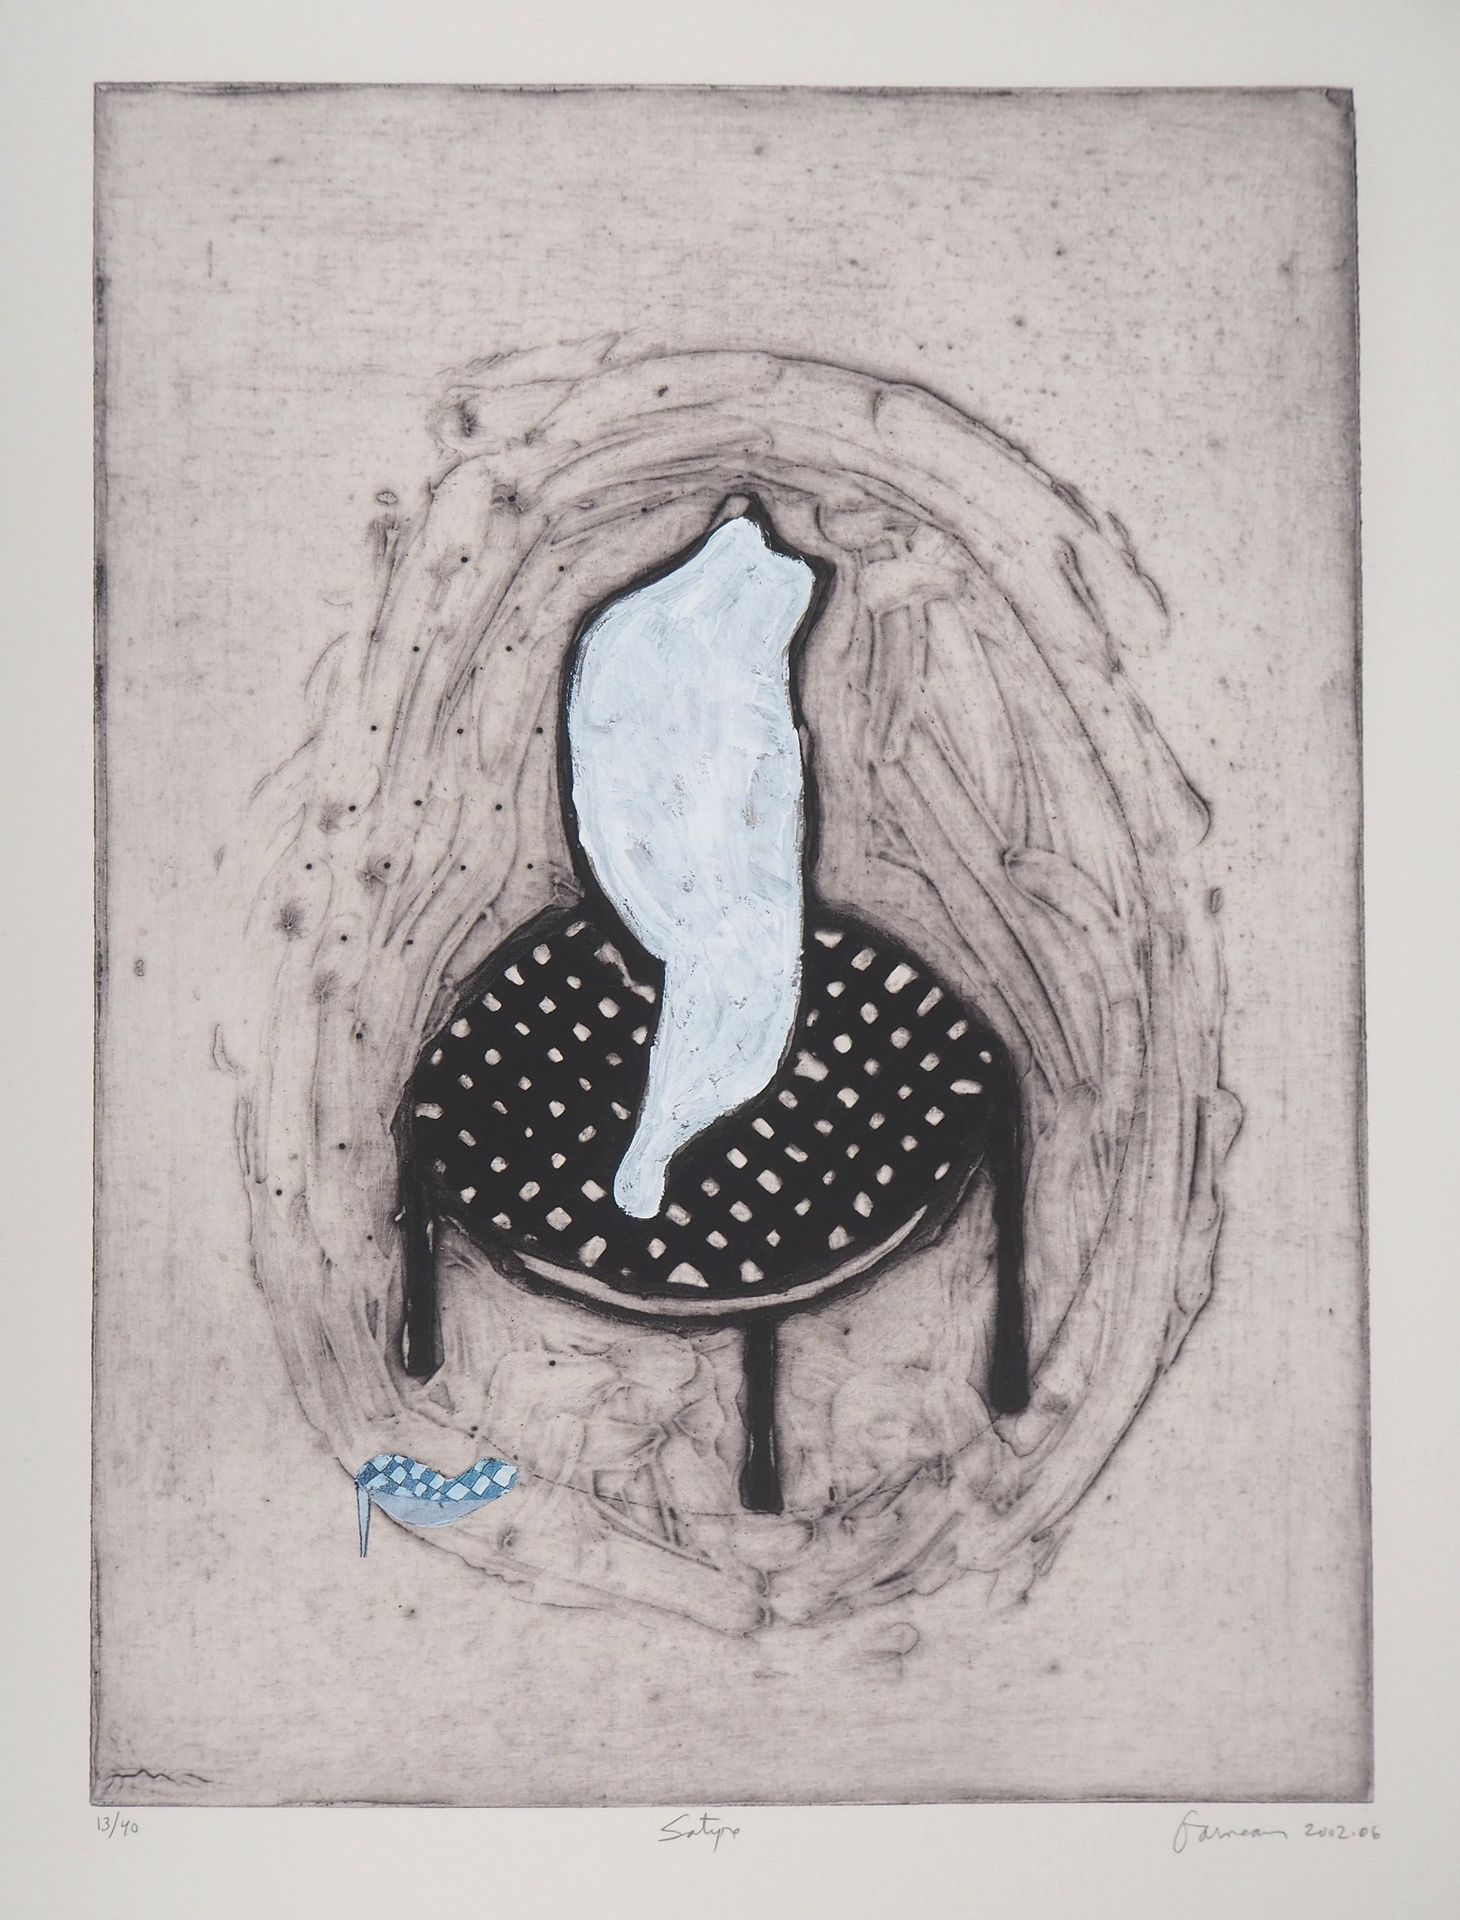 Marc Garneau 马克-加尼奥

Satyr, 2002

用水粉画和拼贴画加强的原始蚀刻画

艺术家用铅笔签名并注明日期

在拱形牛皮纸上，66 x &hellip;